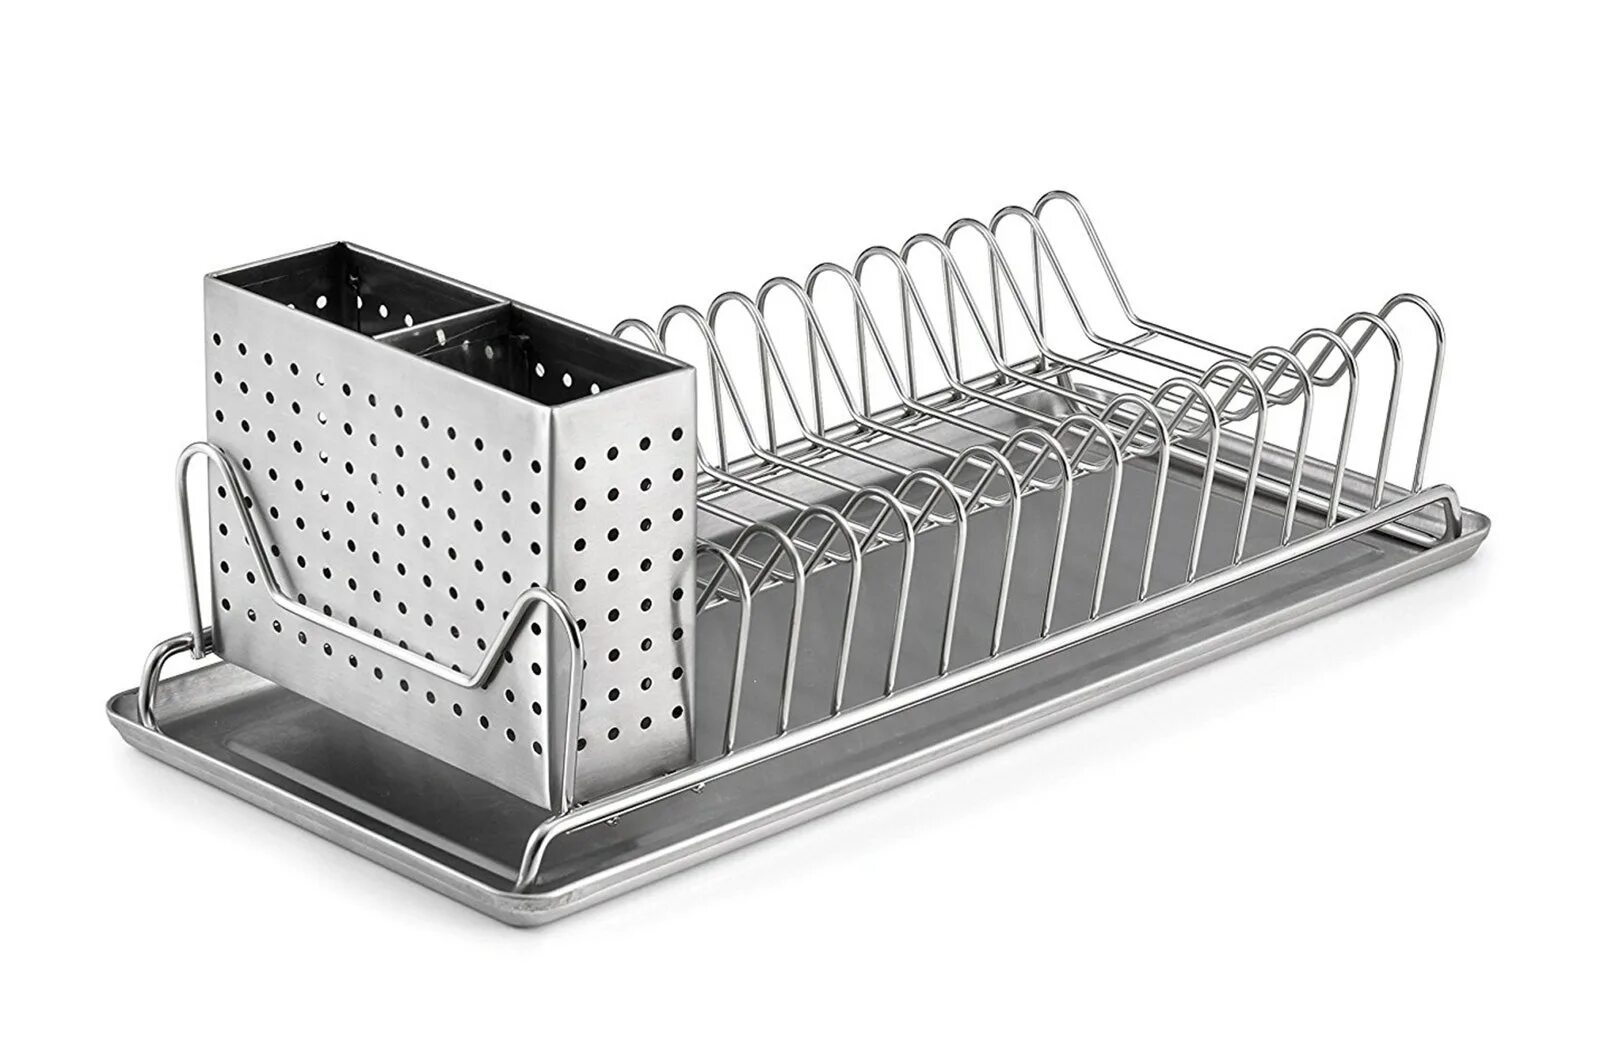 Кухонная решетка для посуды. Сушилка для посуды TECNOINOX. Dish Rack сушилка для посуды. Сушилка для посуды dish Rack км 0769c. Сушилка для посуды Bekker BK-5512.